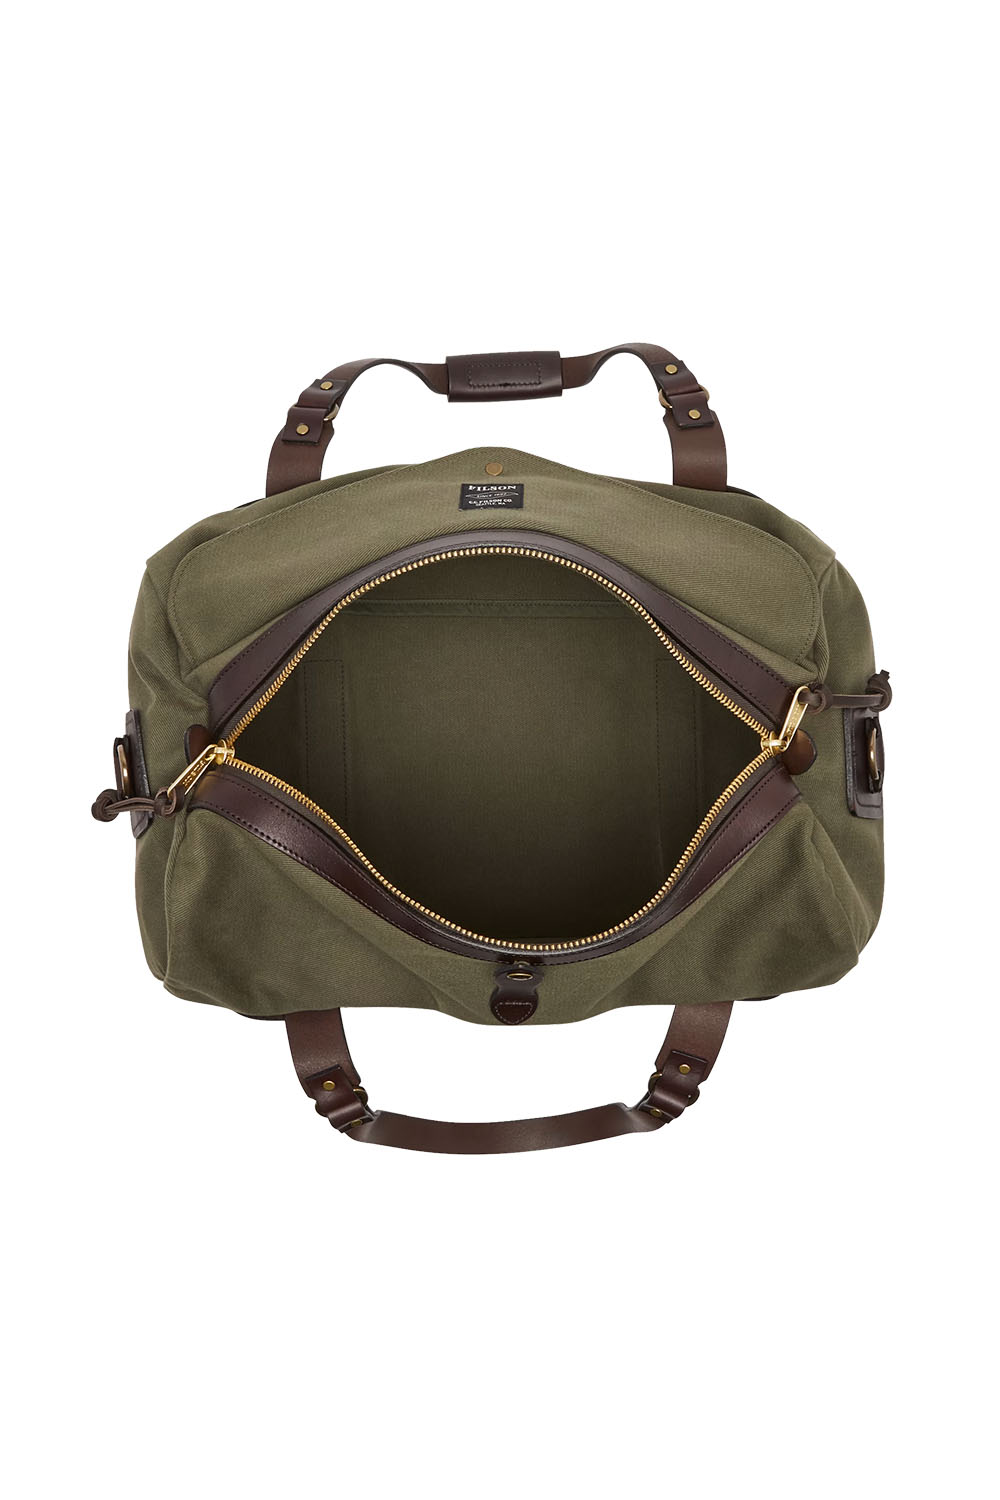 Filson - Medium Duffle Bag - Otter Green - Inside